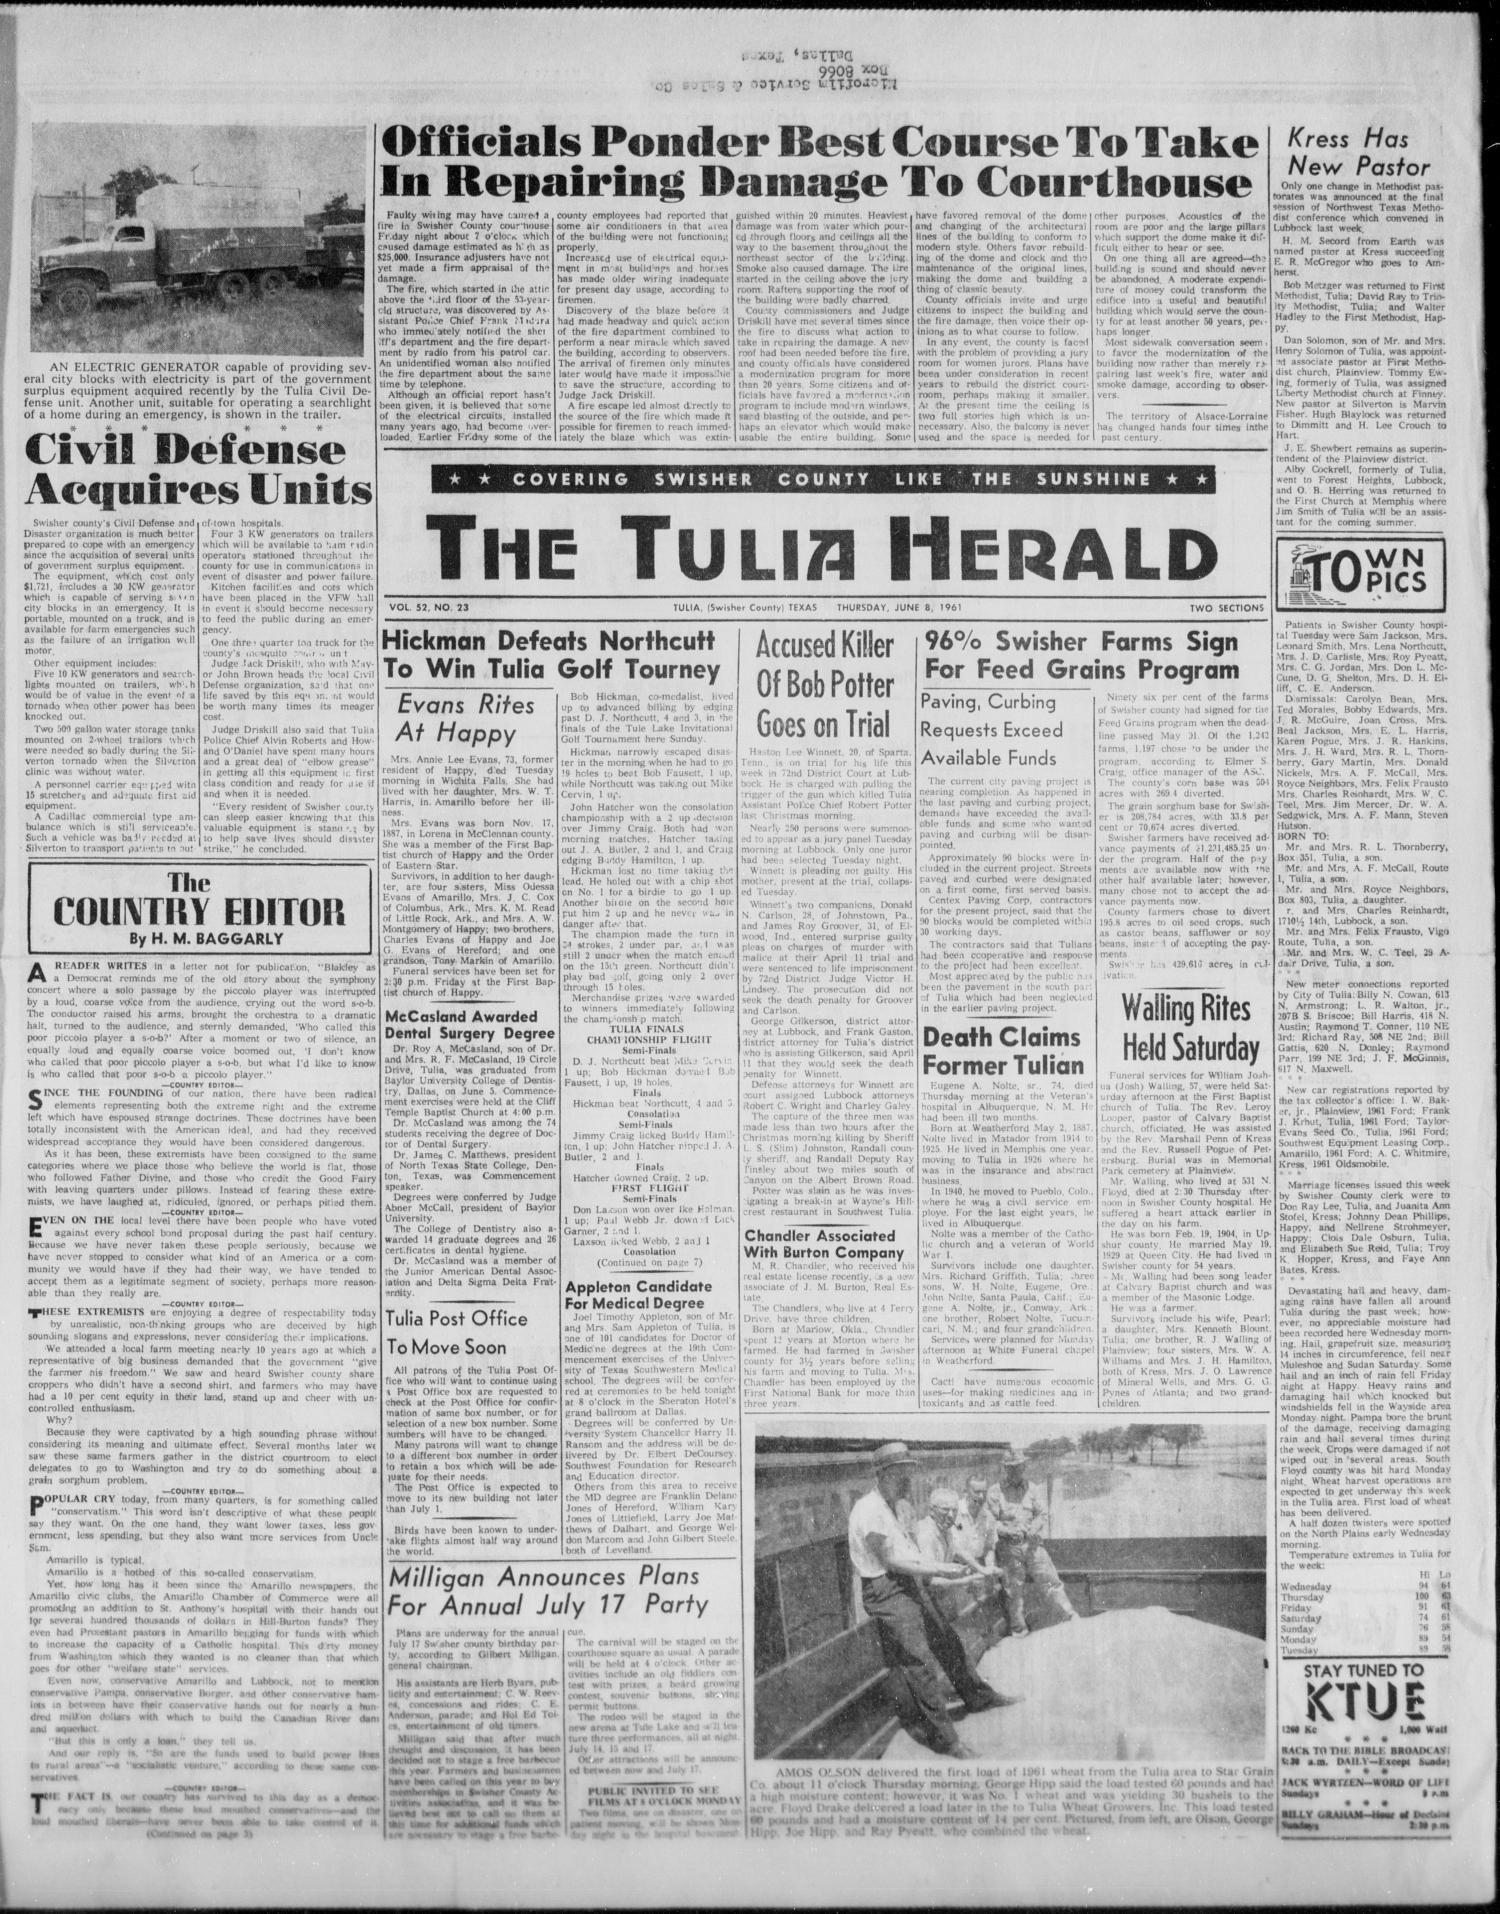 The Tulia Herald (Tulia, Tex), Vol. 52, No. 23, Ed. 1, Thursday, June 8, 1961
                                                
                                                    1
                                                